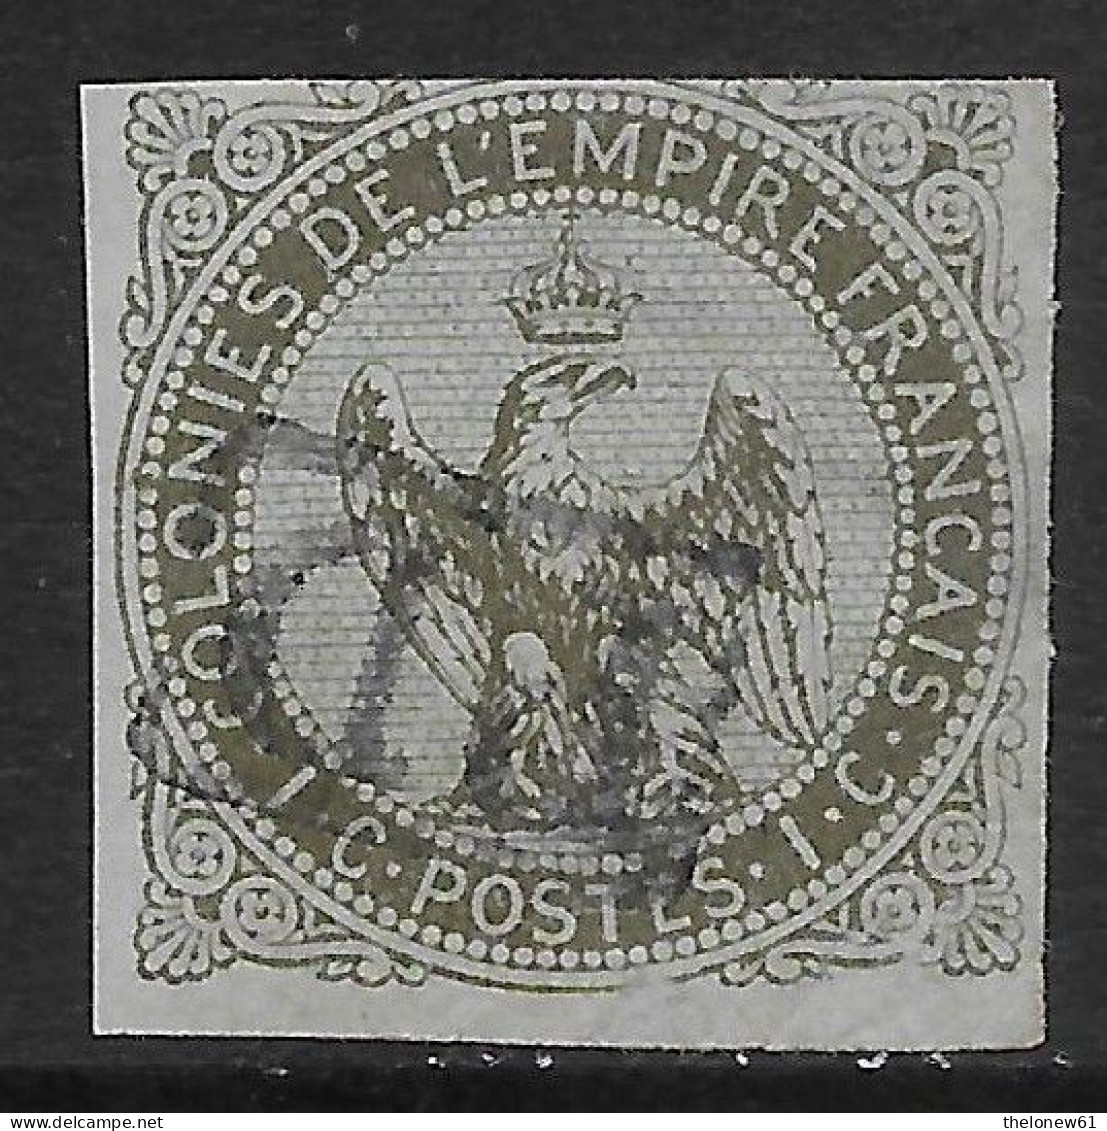 Francia France 1859 Colonies Emissions Générales Aigle Impérial C1 YT N.1 US - Eagle And Crown